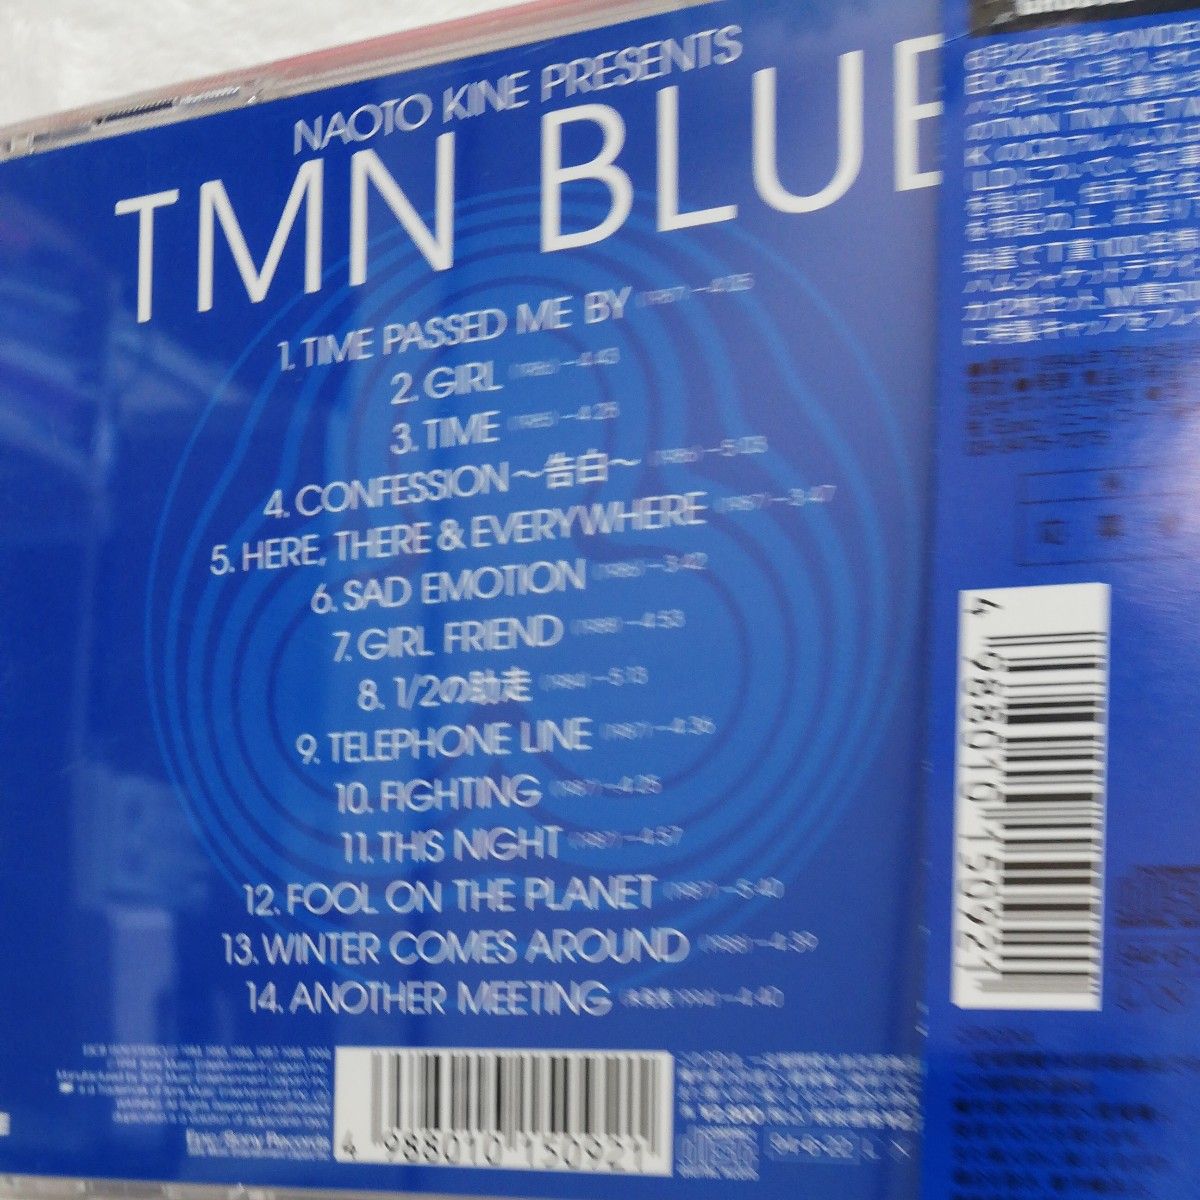 TMN BLACK RED BLUE 3枚セット